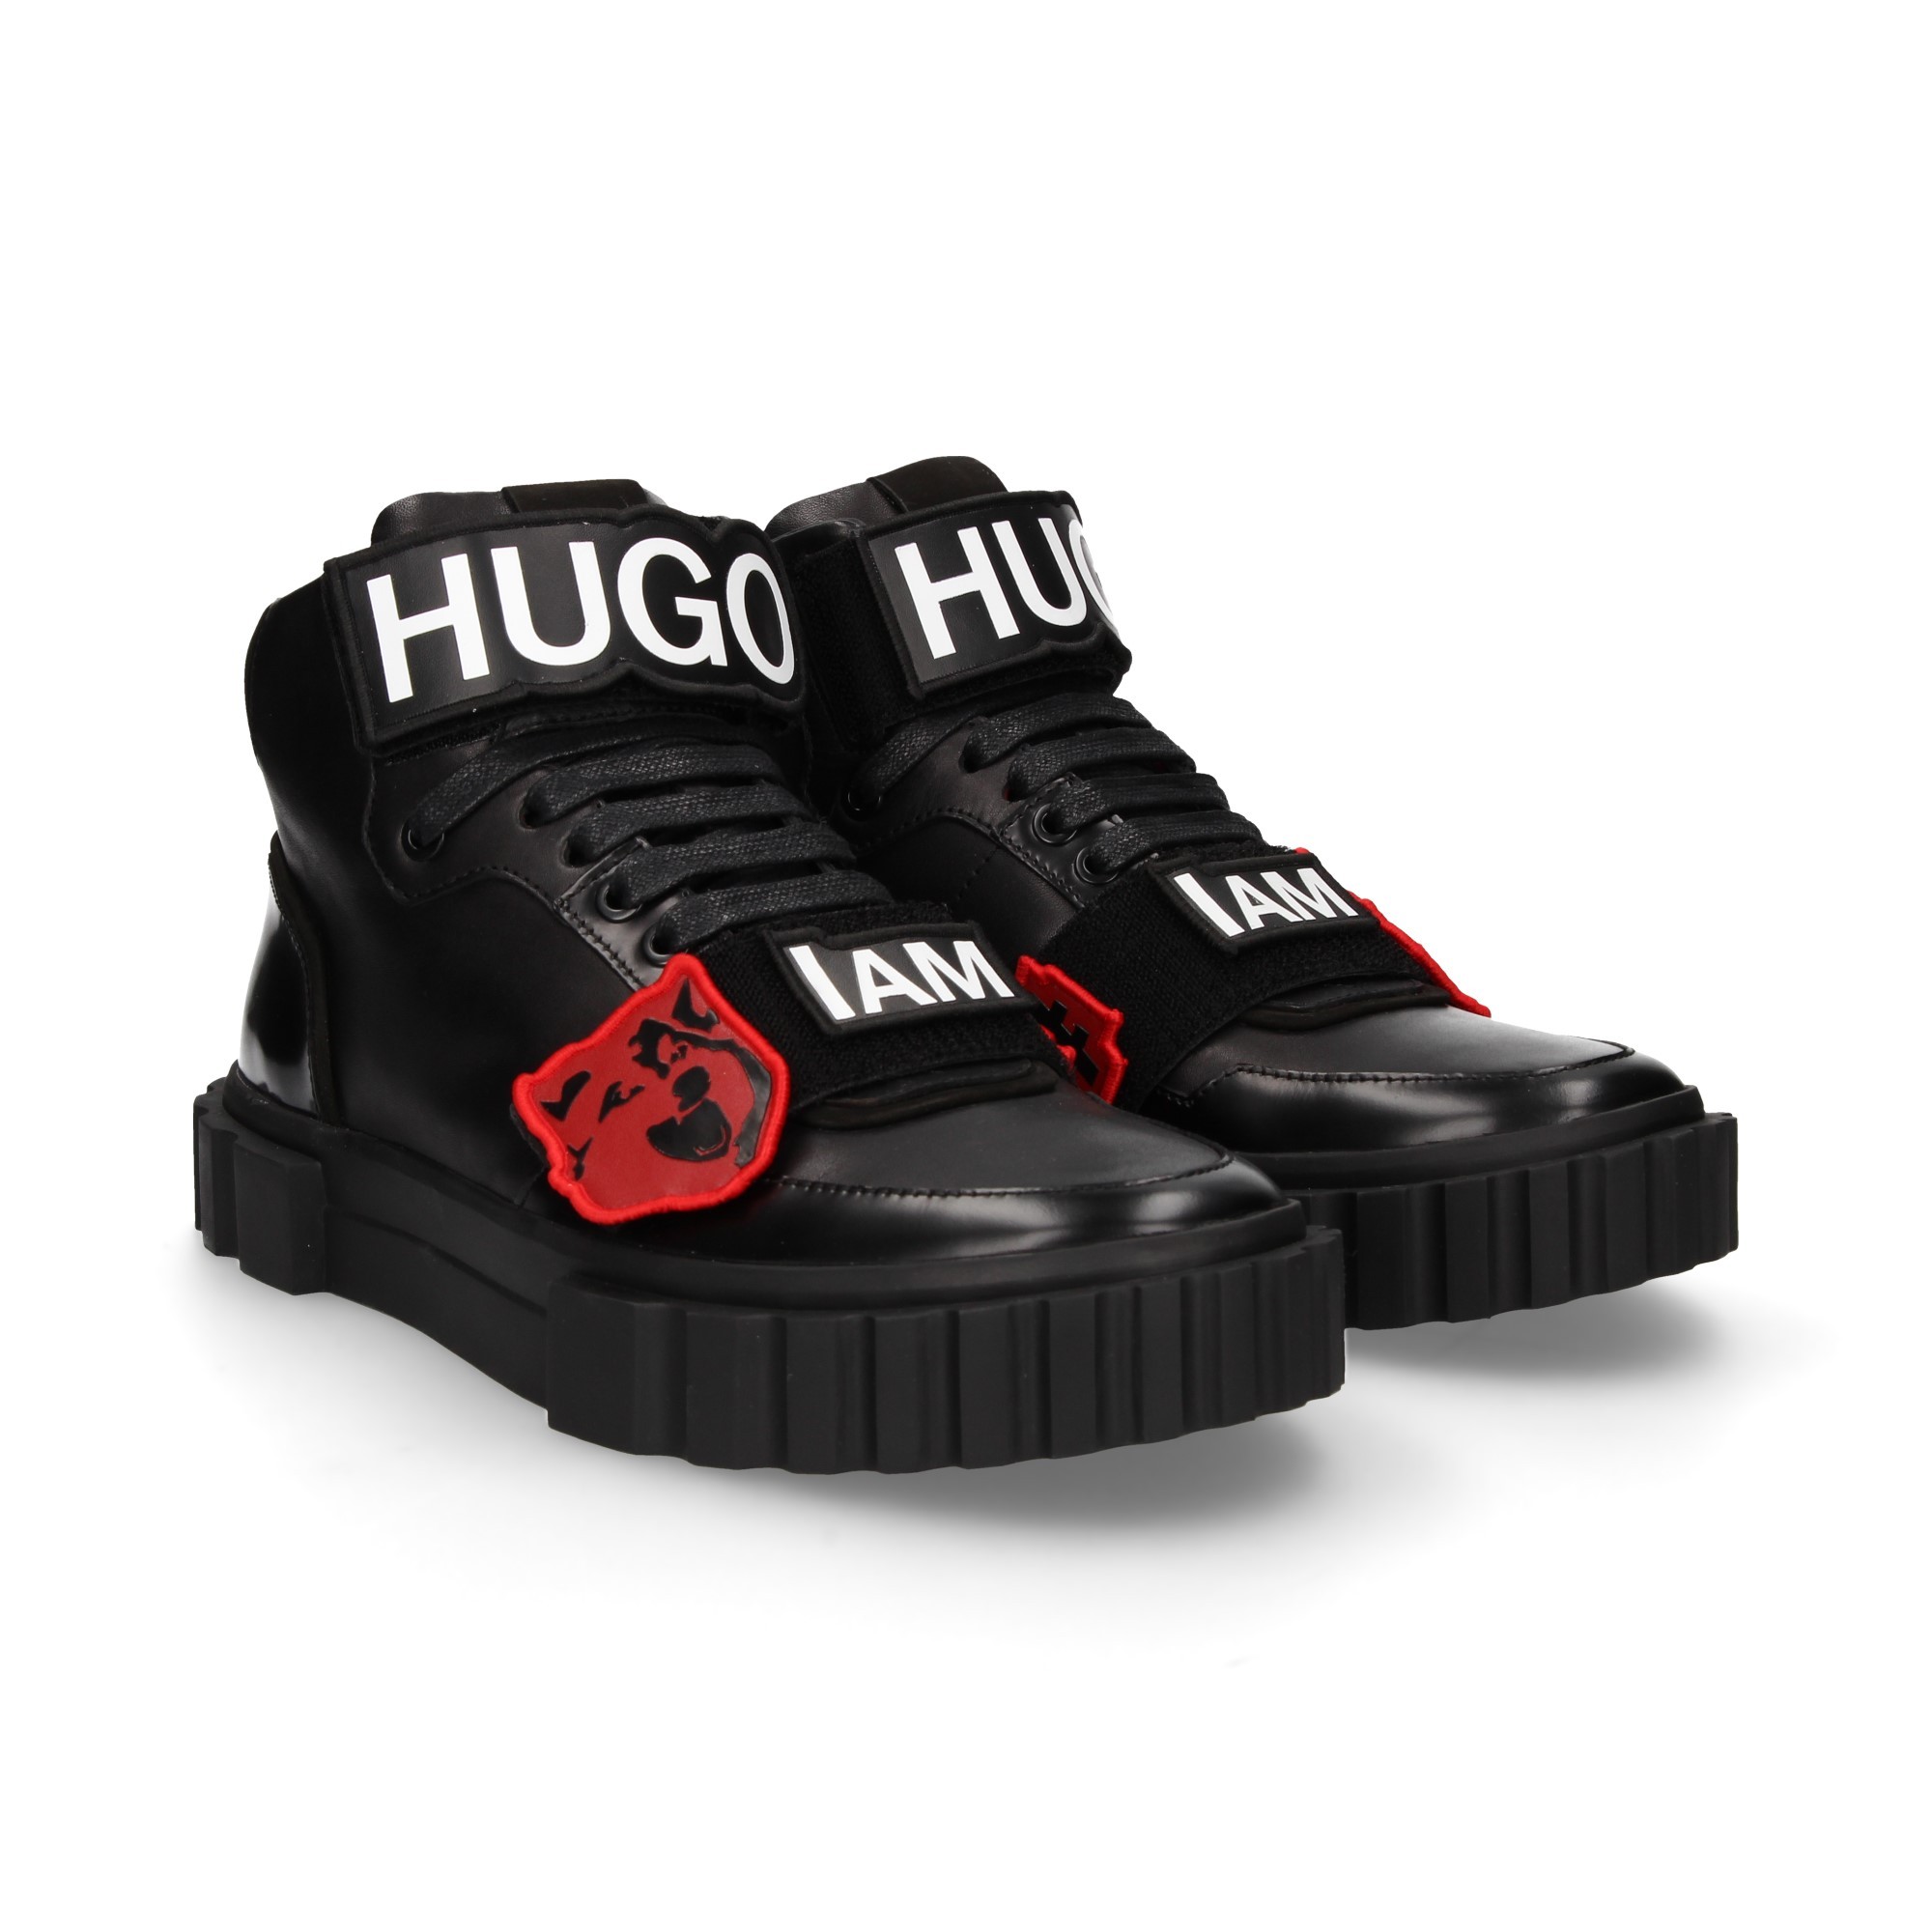 hugo boss velcro shoes